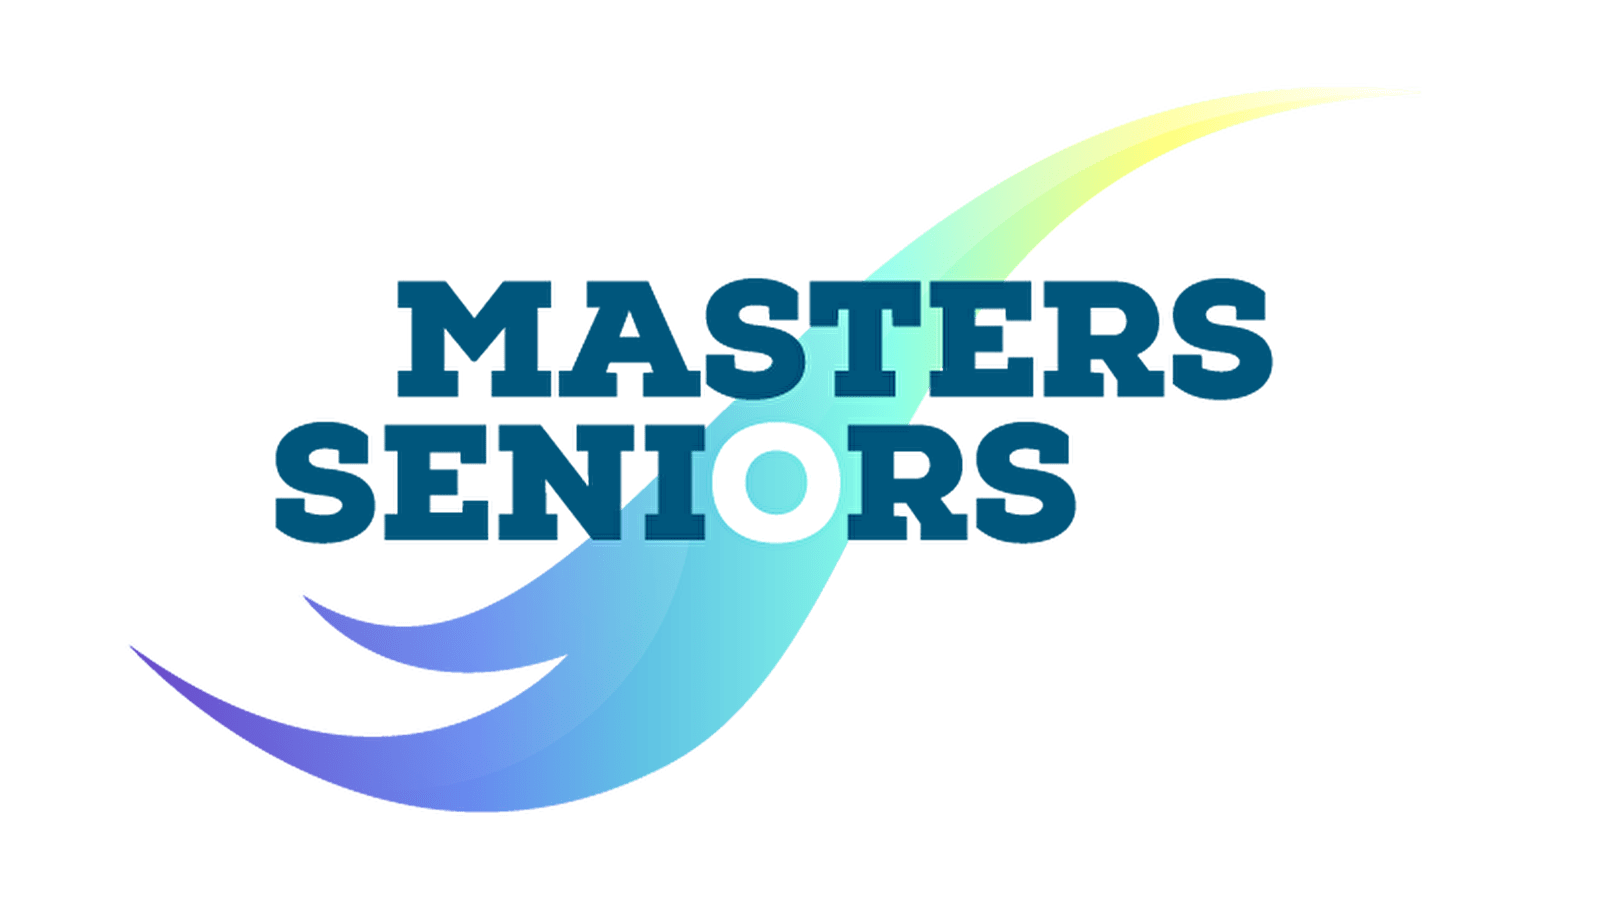 Les Masters Seniors